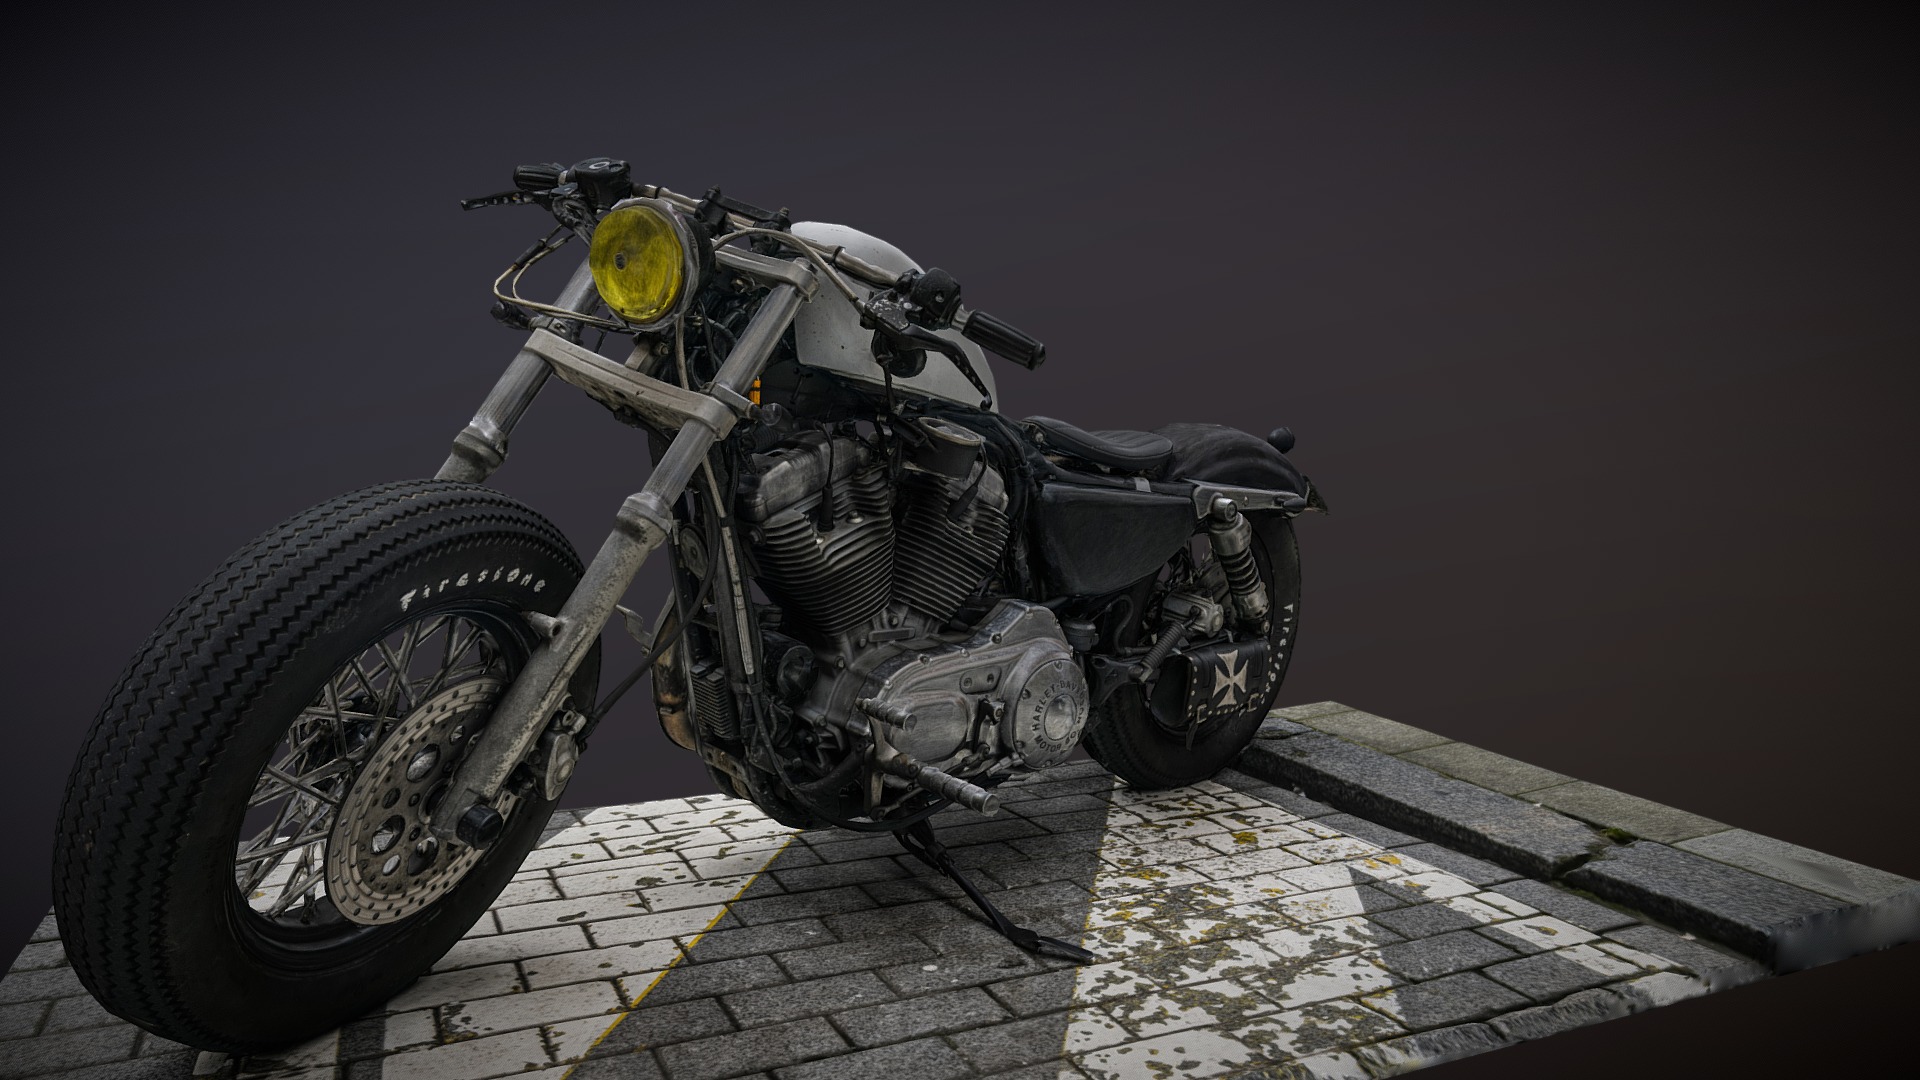 3D model Custom Harley Davidson photogrammetry scan - This is a 3D model of the Custom Harley Davidson photogrammetry scan. The 3D model is about a motorcycle parked on a brick surface.